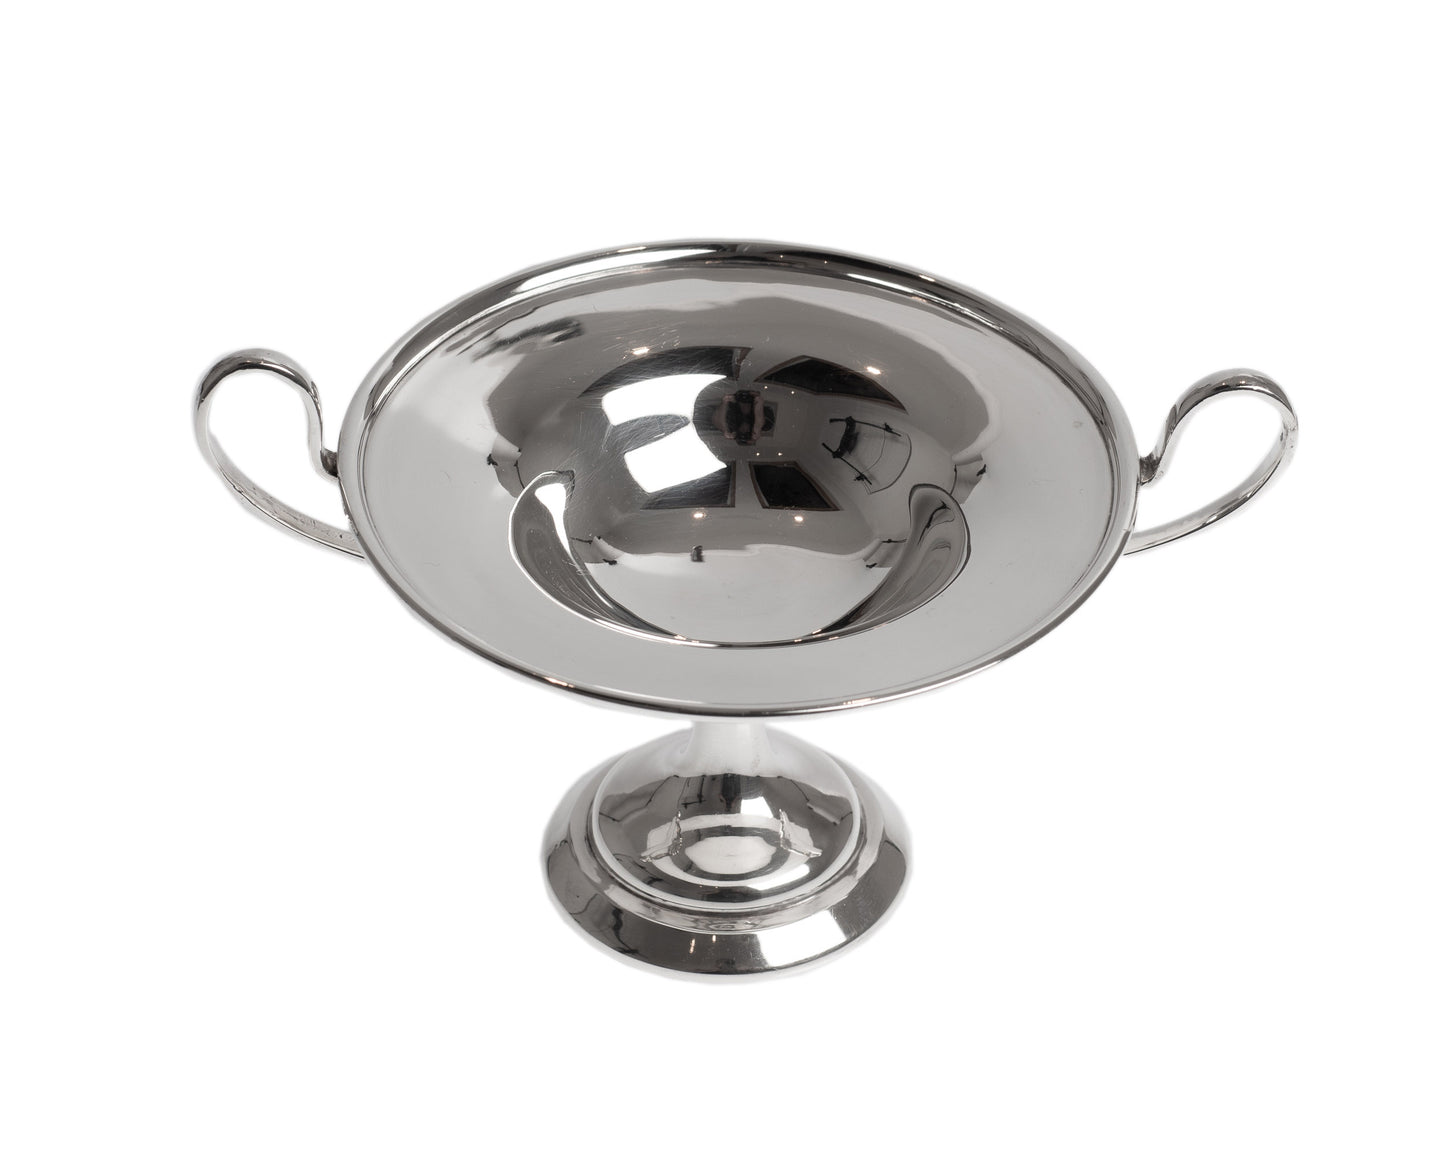 Antique Silver Pedestal Dish Goldsmiths & Silversmiths London 1907 - Edwardian (Code 2324)